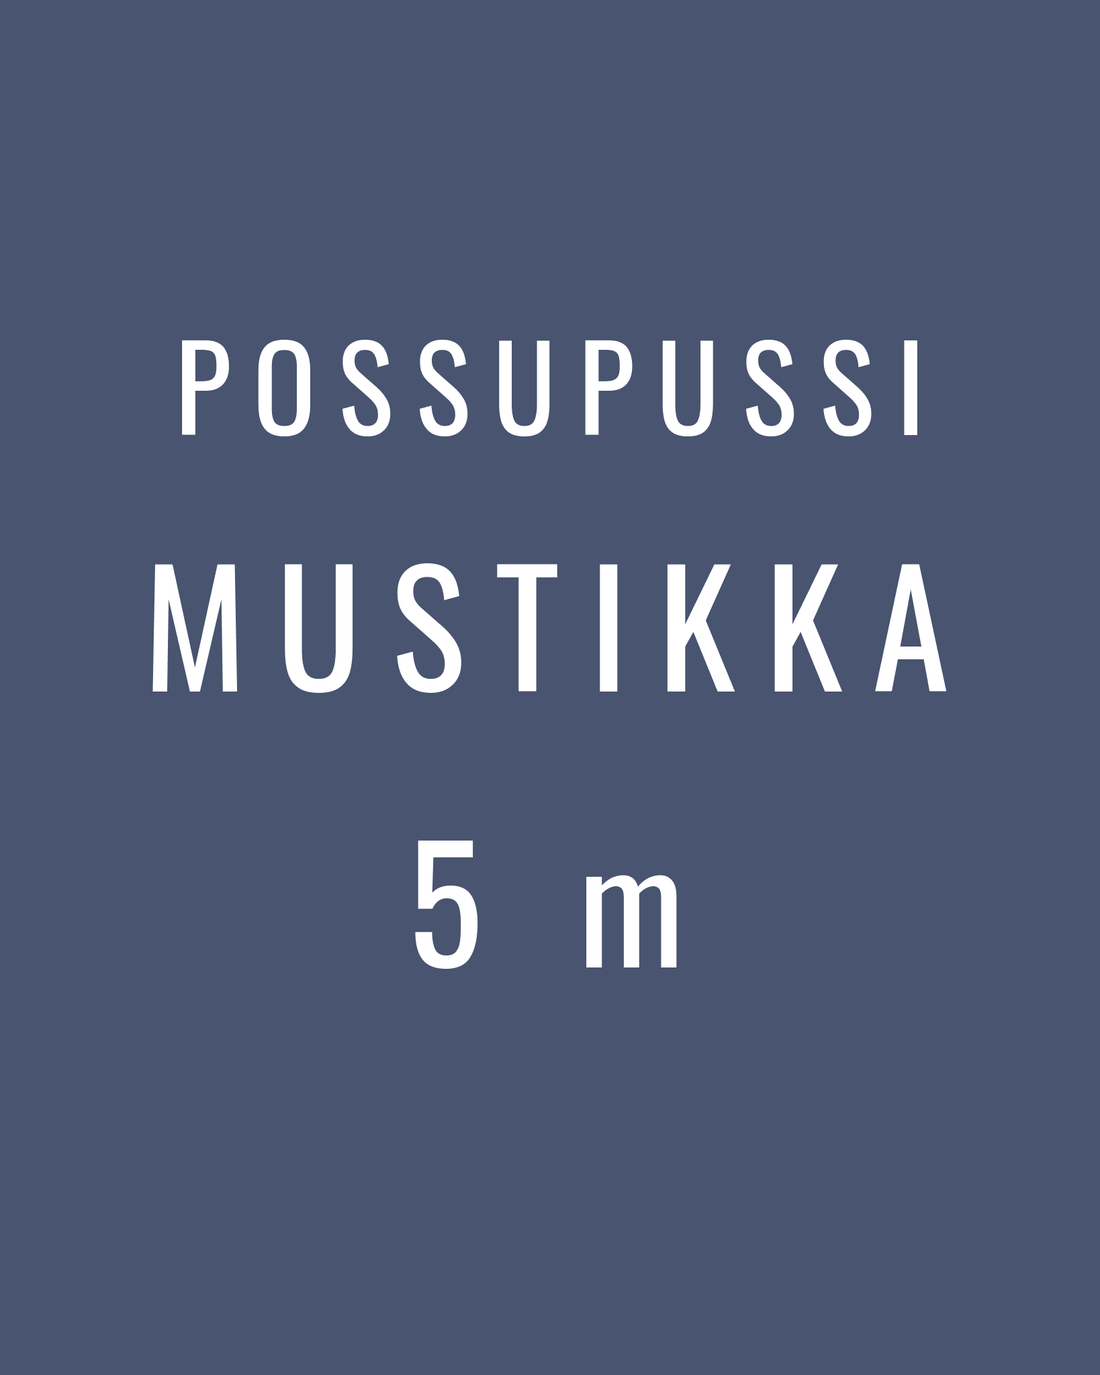 Possupussi - Mustikka, 5 m - Ommellinen